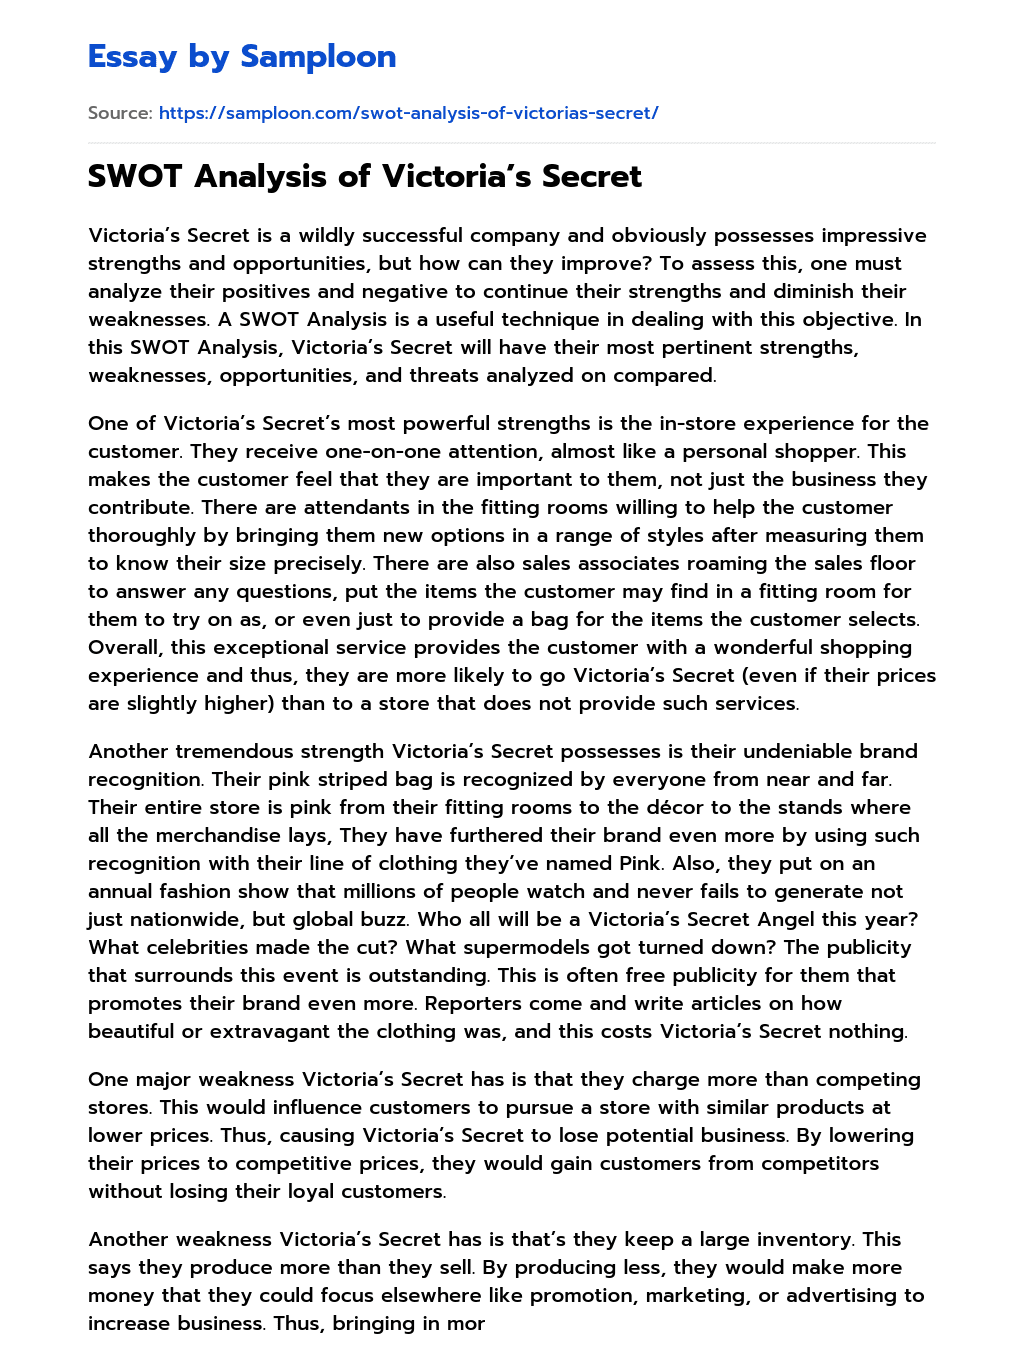 SWOT Analysis of Victoria’s Secret essay